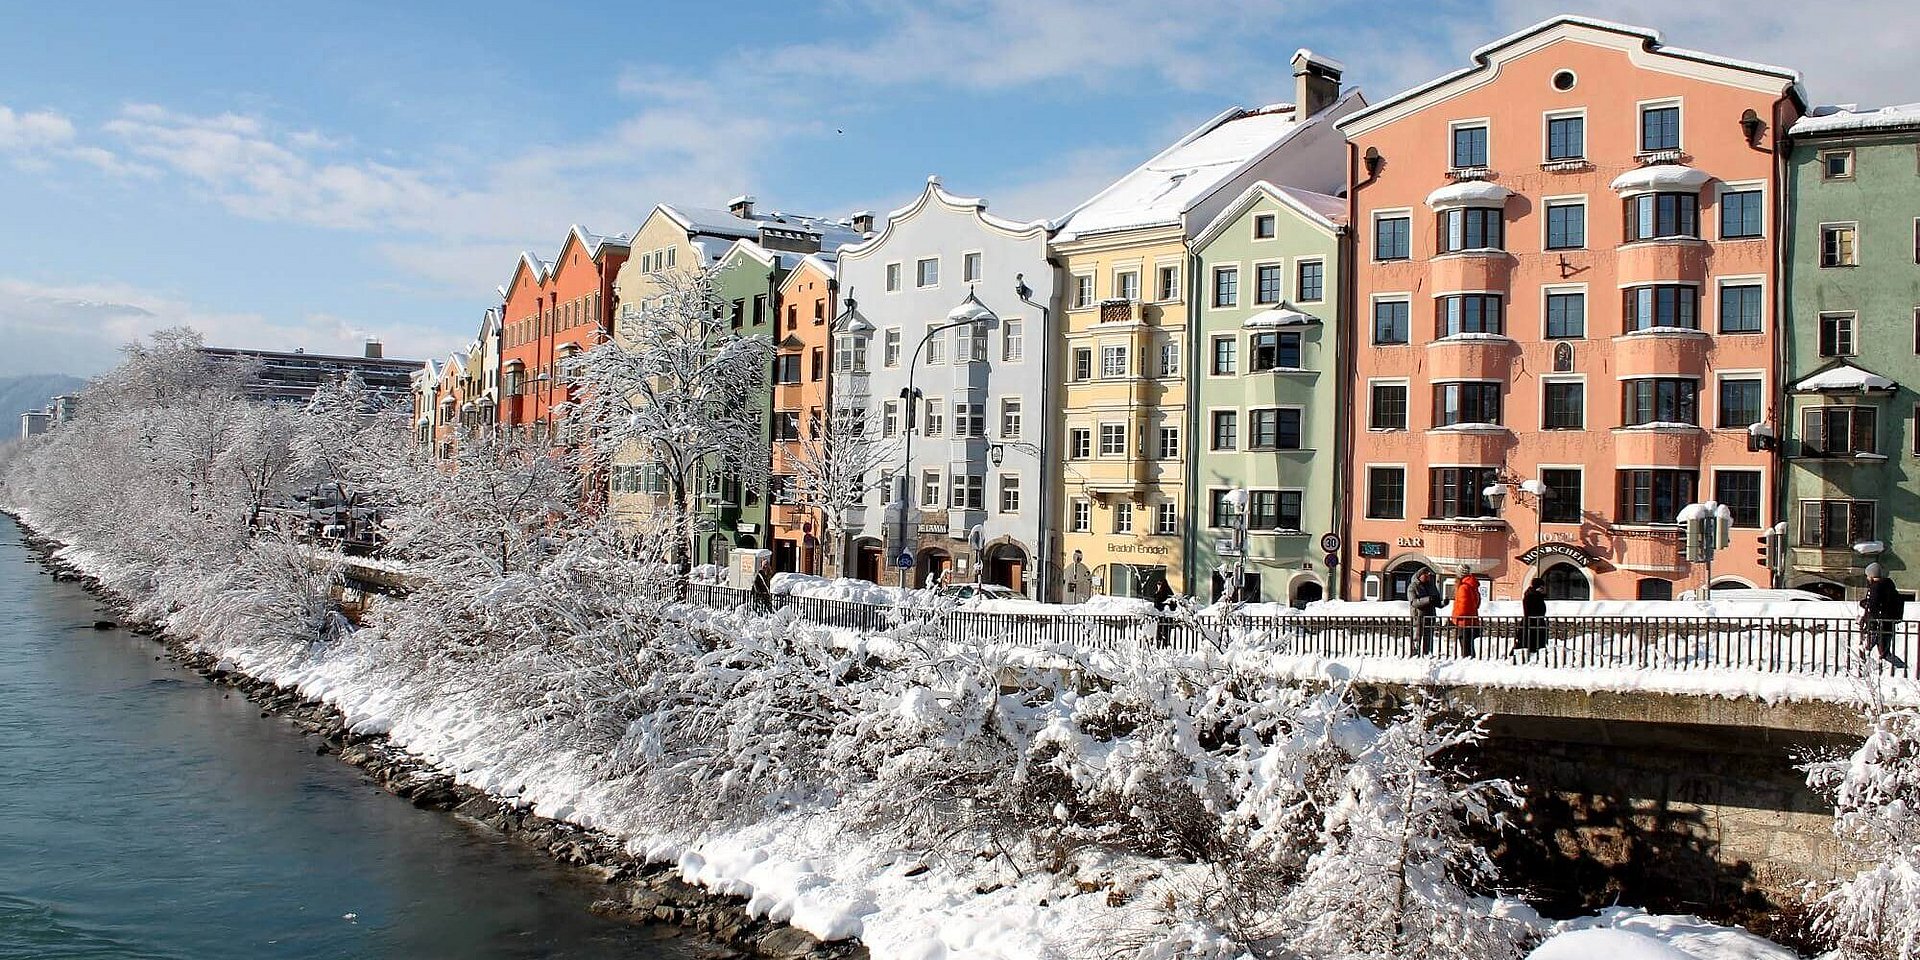 Vacances d'hiver à l'hôtel Mondschein à Innsbruck